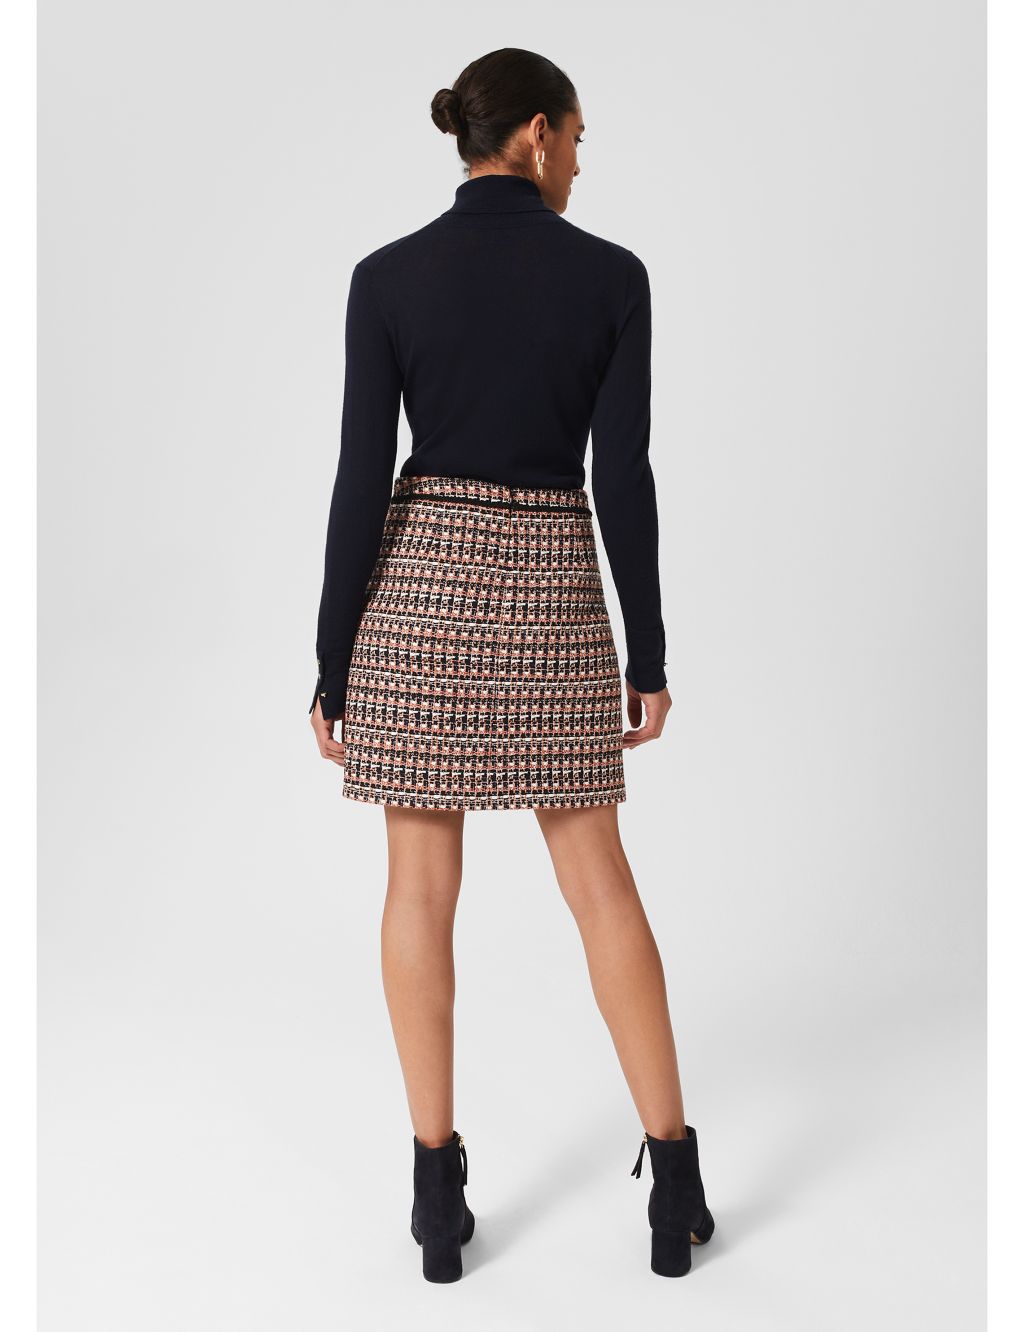 Textured Mini Slip Skirt image 3